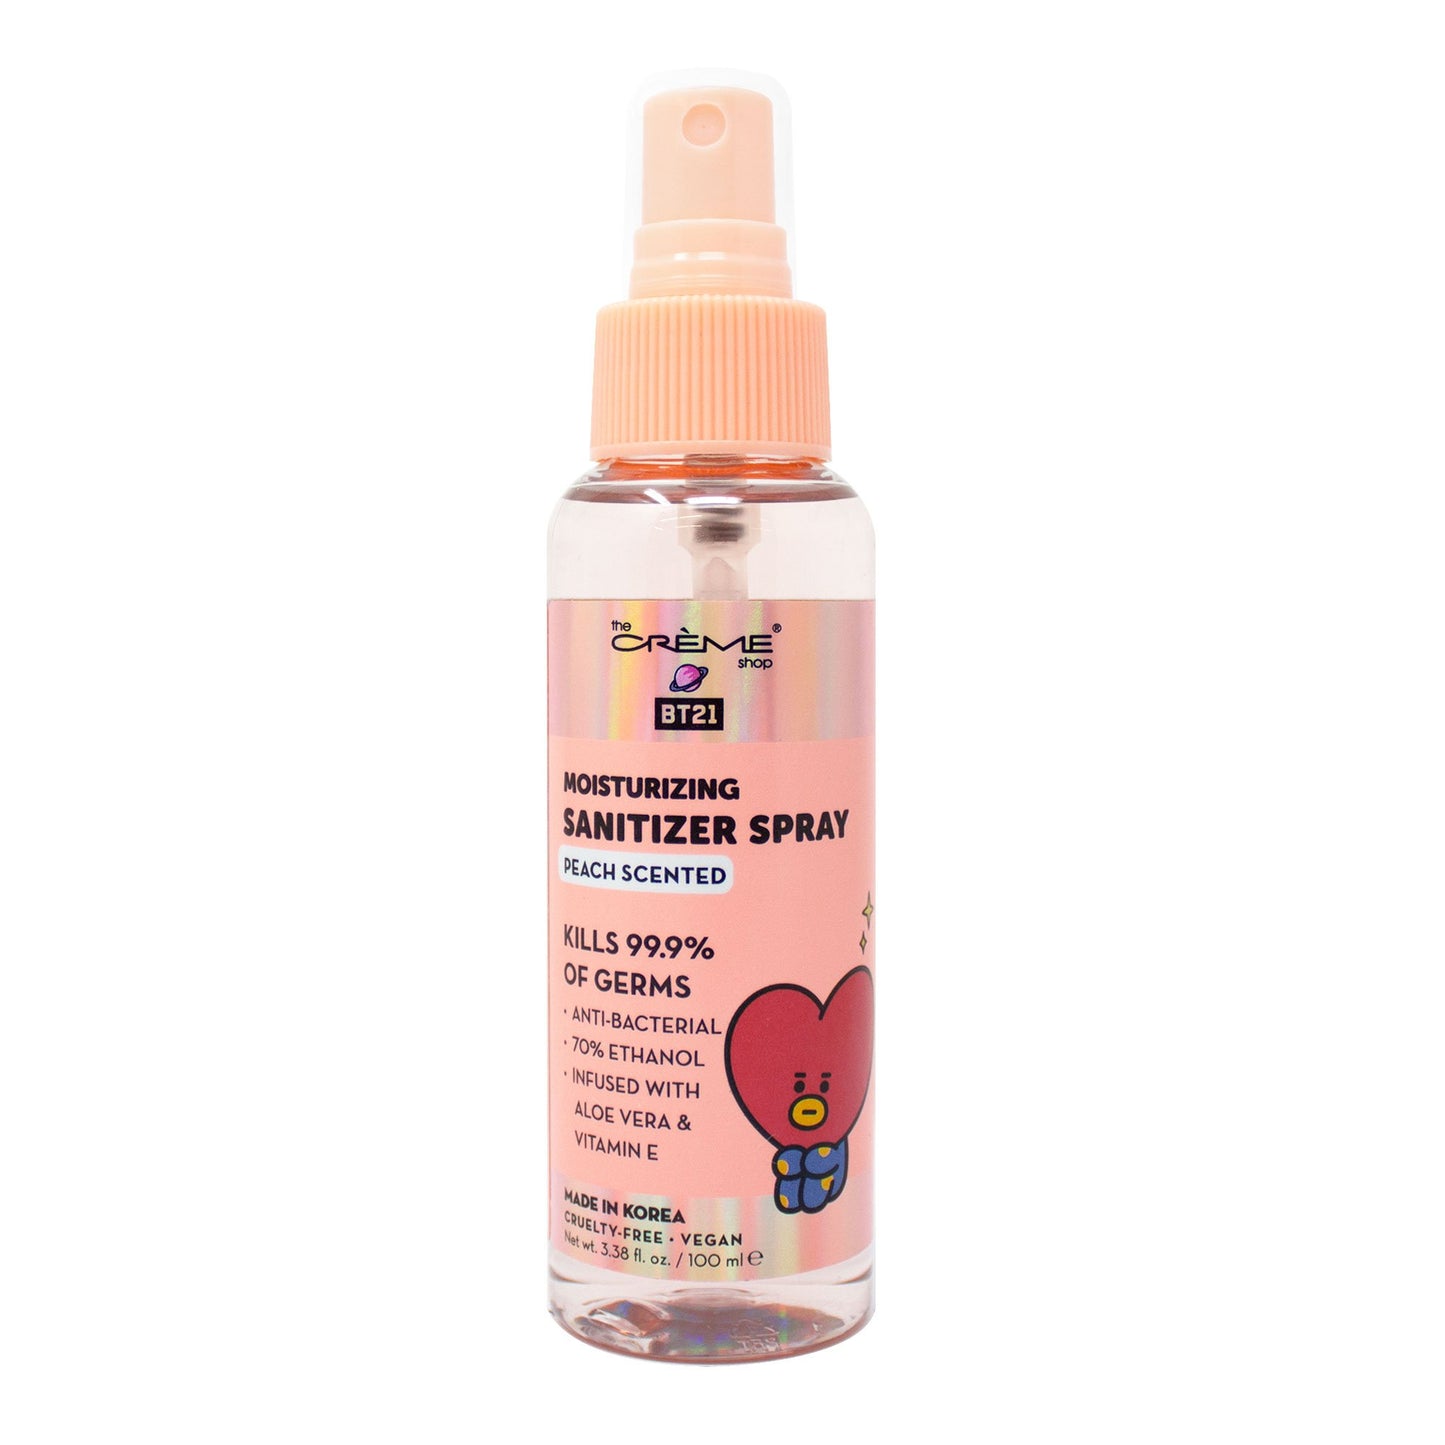 TATA Sanitizing Spray (Peach Scented) Sanitizer Sprays - The Crème Shop x BT21 